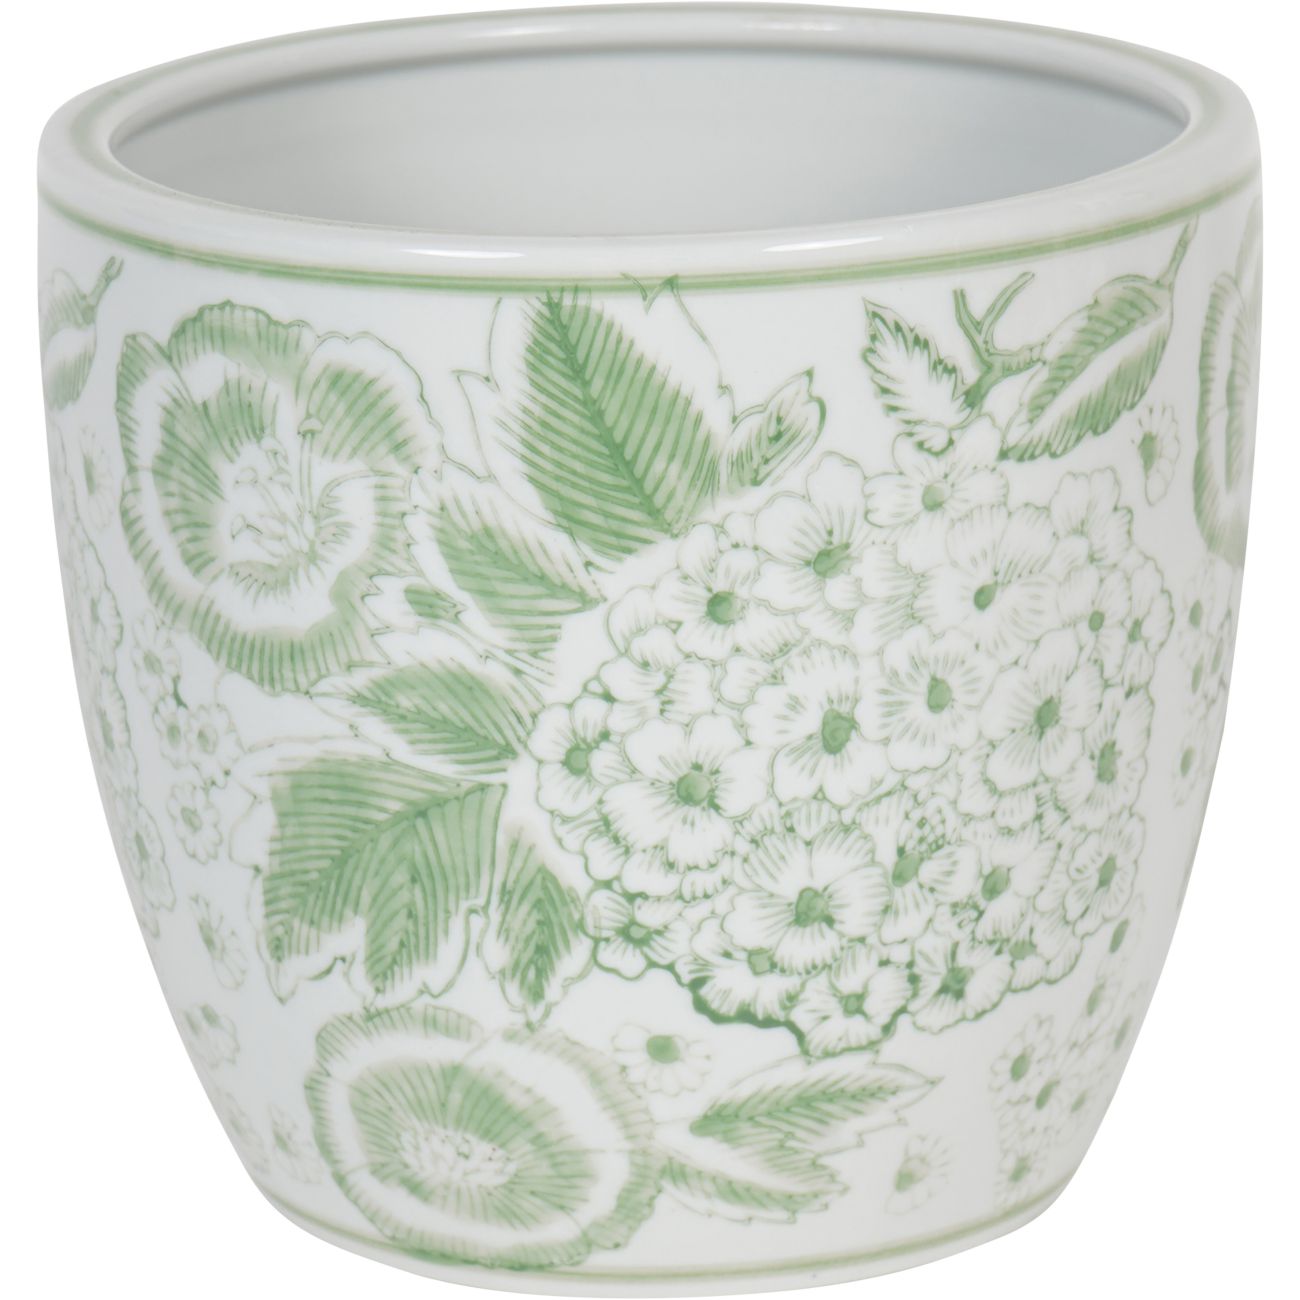 Laura Ashley Green Porcelain Planter Medium